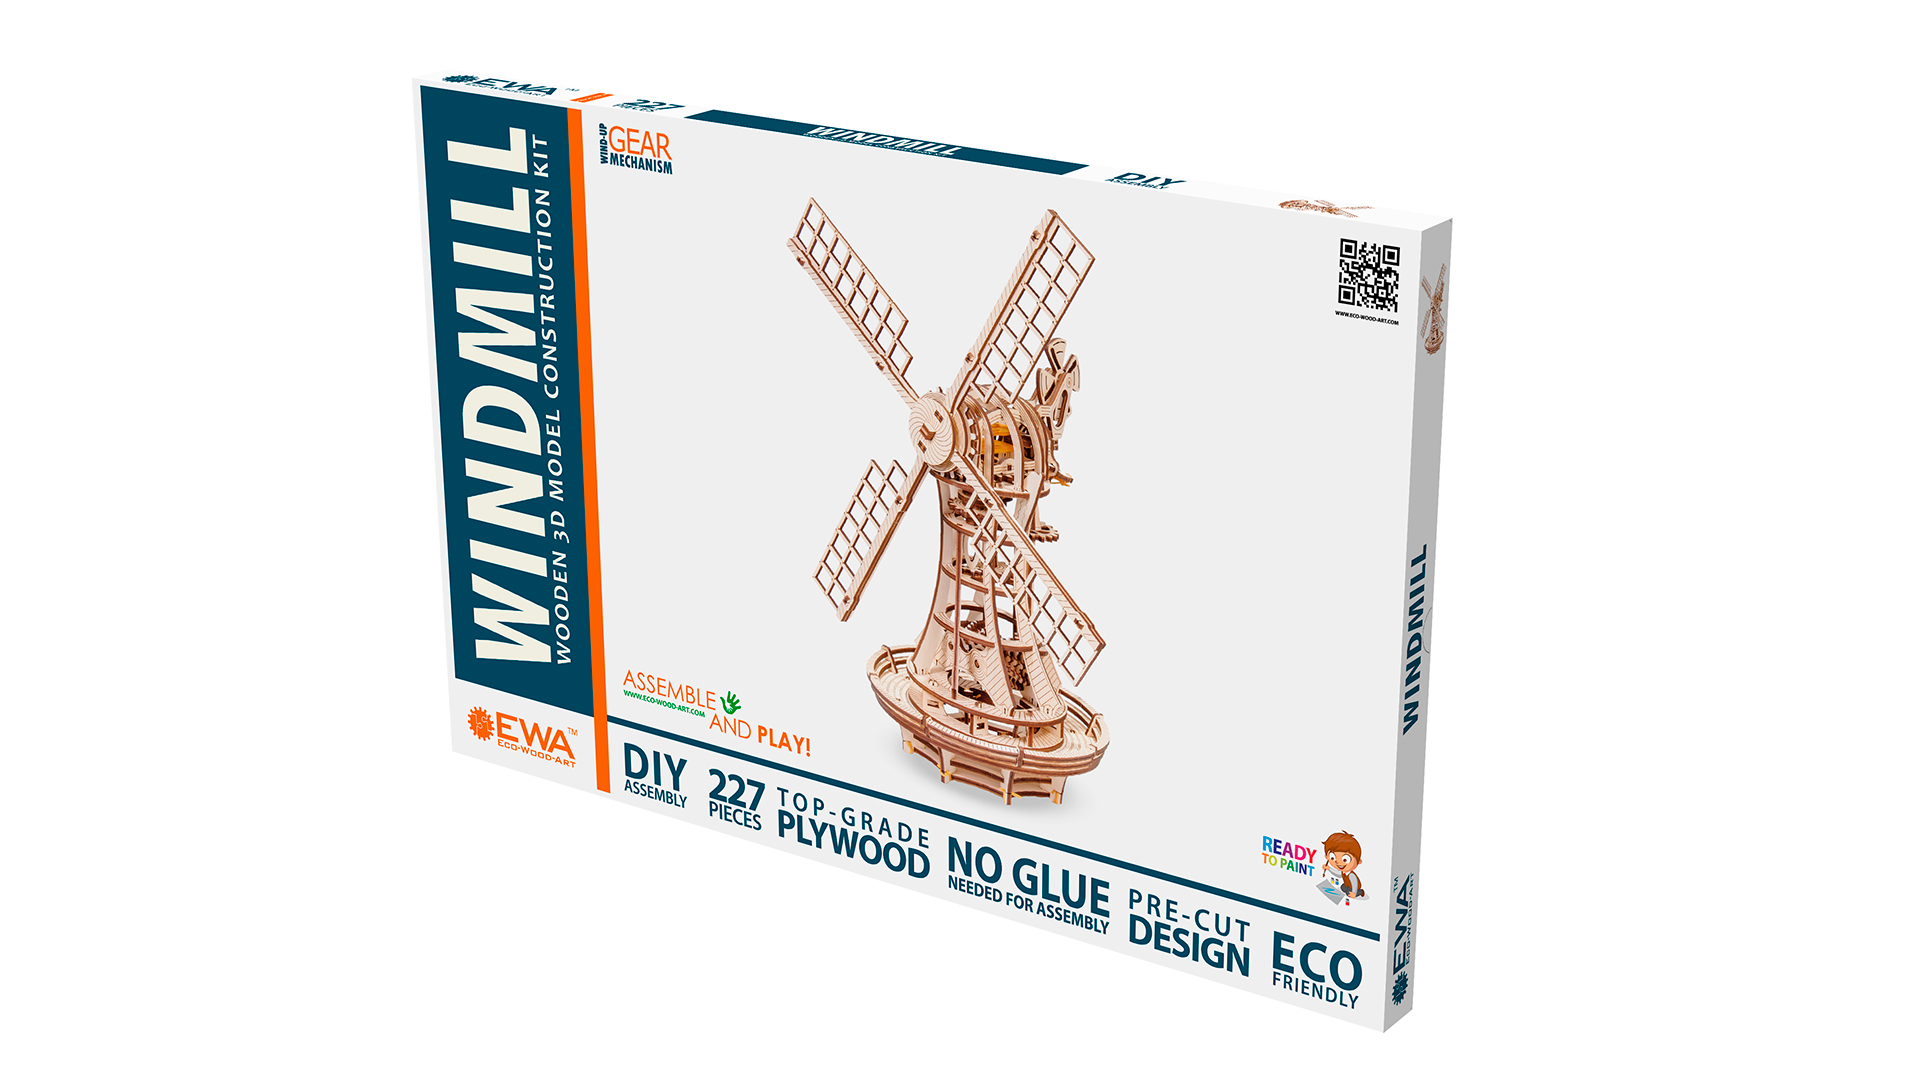 Veterný mlyn – Windmill